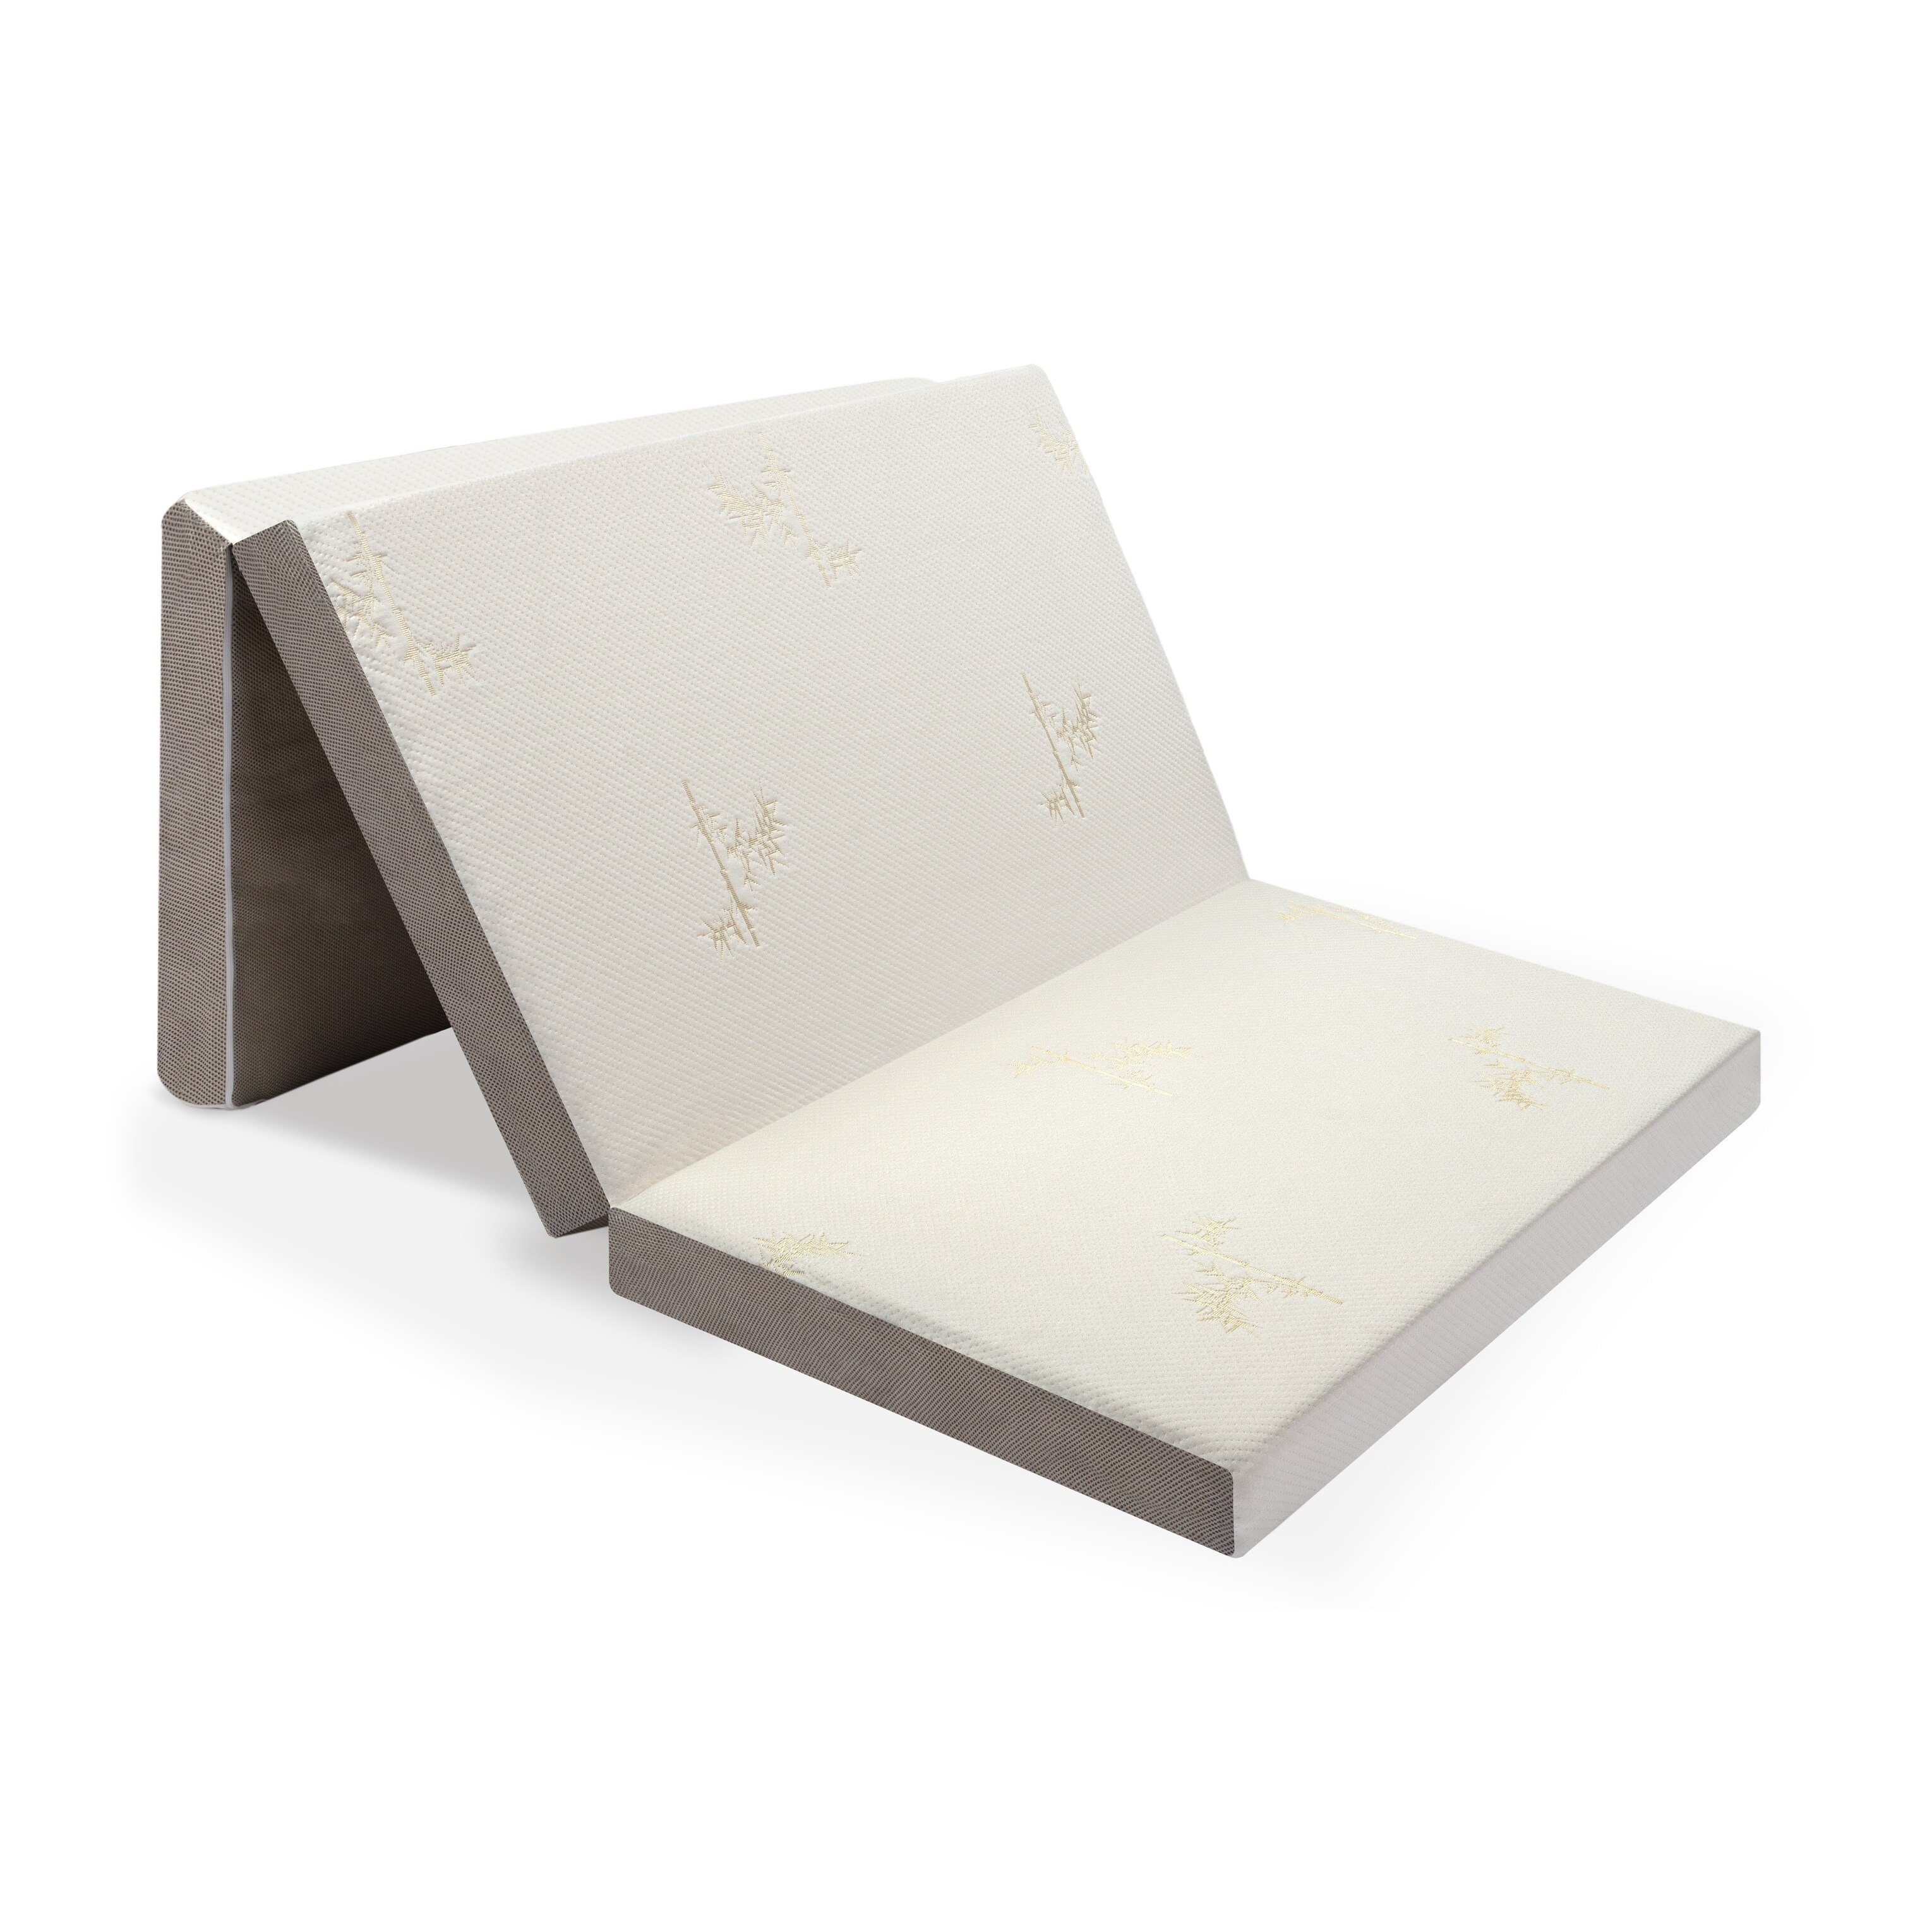 4'' Thick Tri Folding Memory Foam Mattress 75 x 25 Sleeper Outdoor Single Bed 